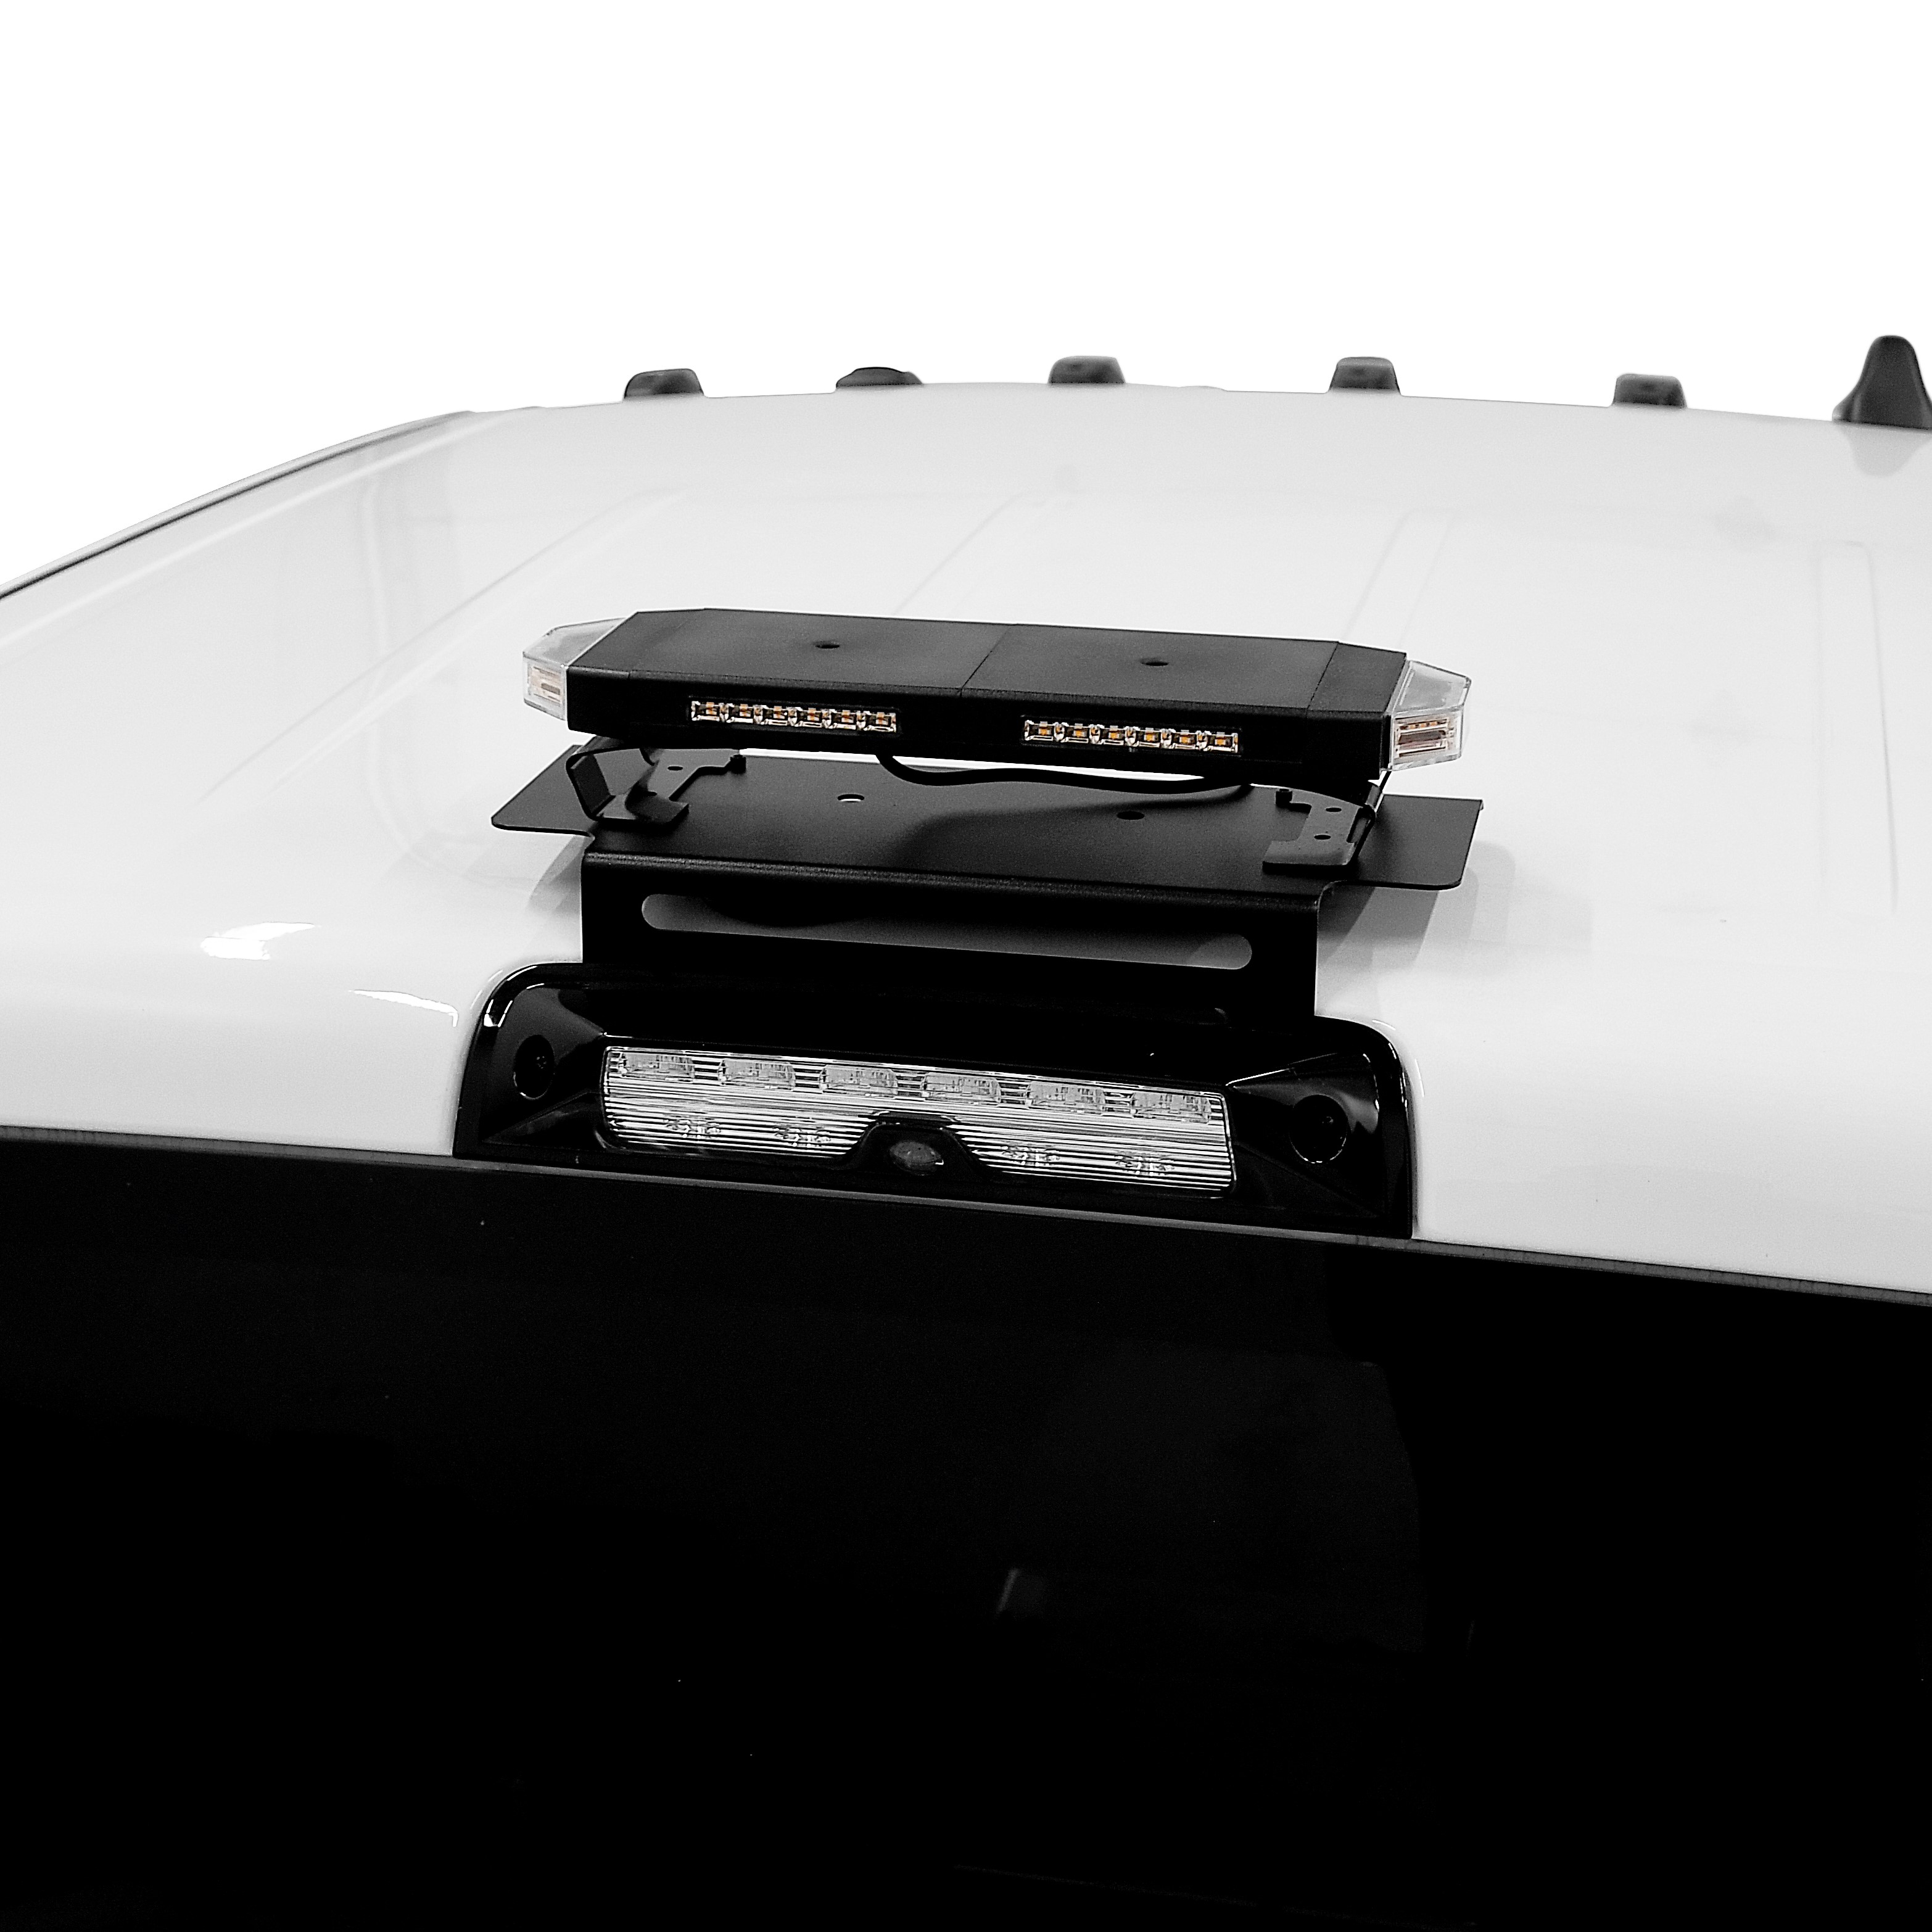 950004&950116 - Putco 16" Hornet Stealth Roof Top LED Lightbar Brake Light Mount Bracket Fits Dodge Ram Trucks 1500 2009-2023 (Also fits 1500 w/ 5 Lug Wheels 2019-2023)